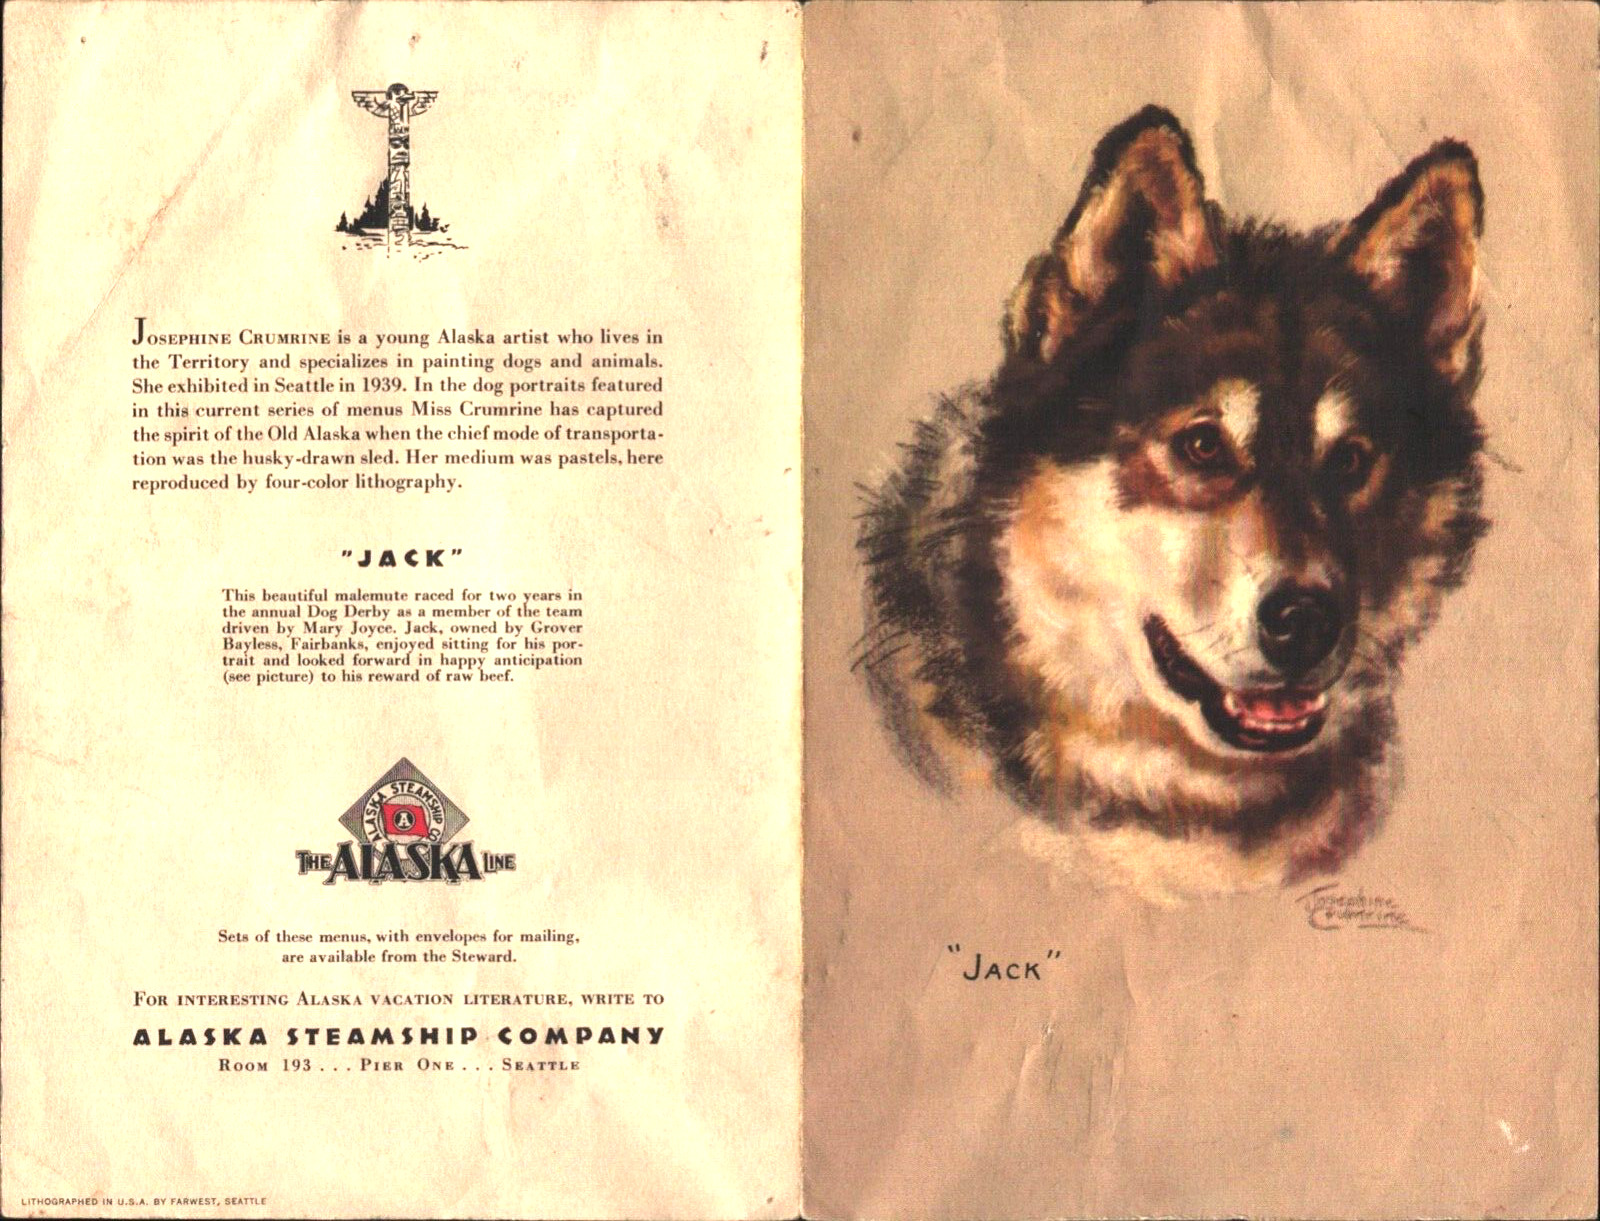 1949 ALASKAN STEAMSHIP COMPANY vintage luncheon menu S.S. DENALI The Alaska Line